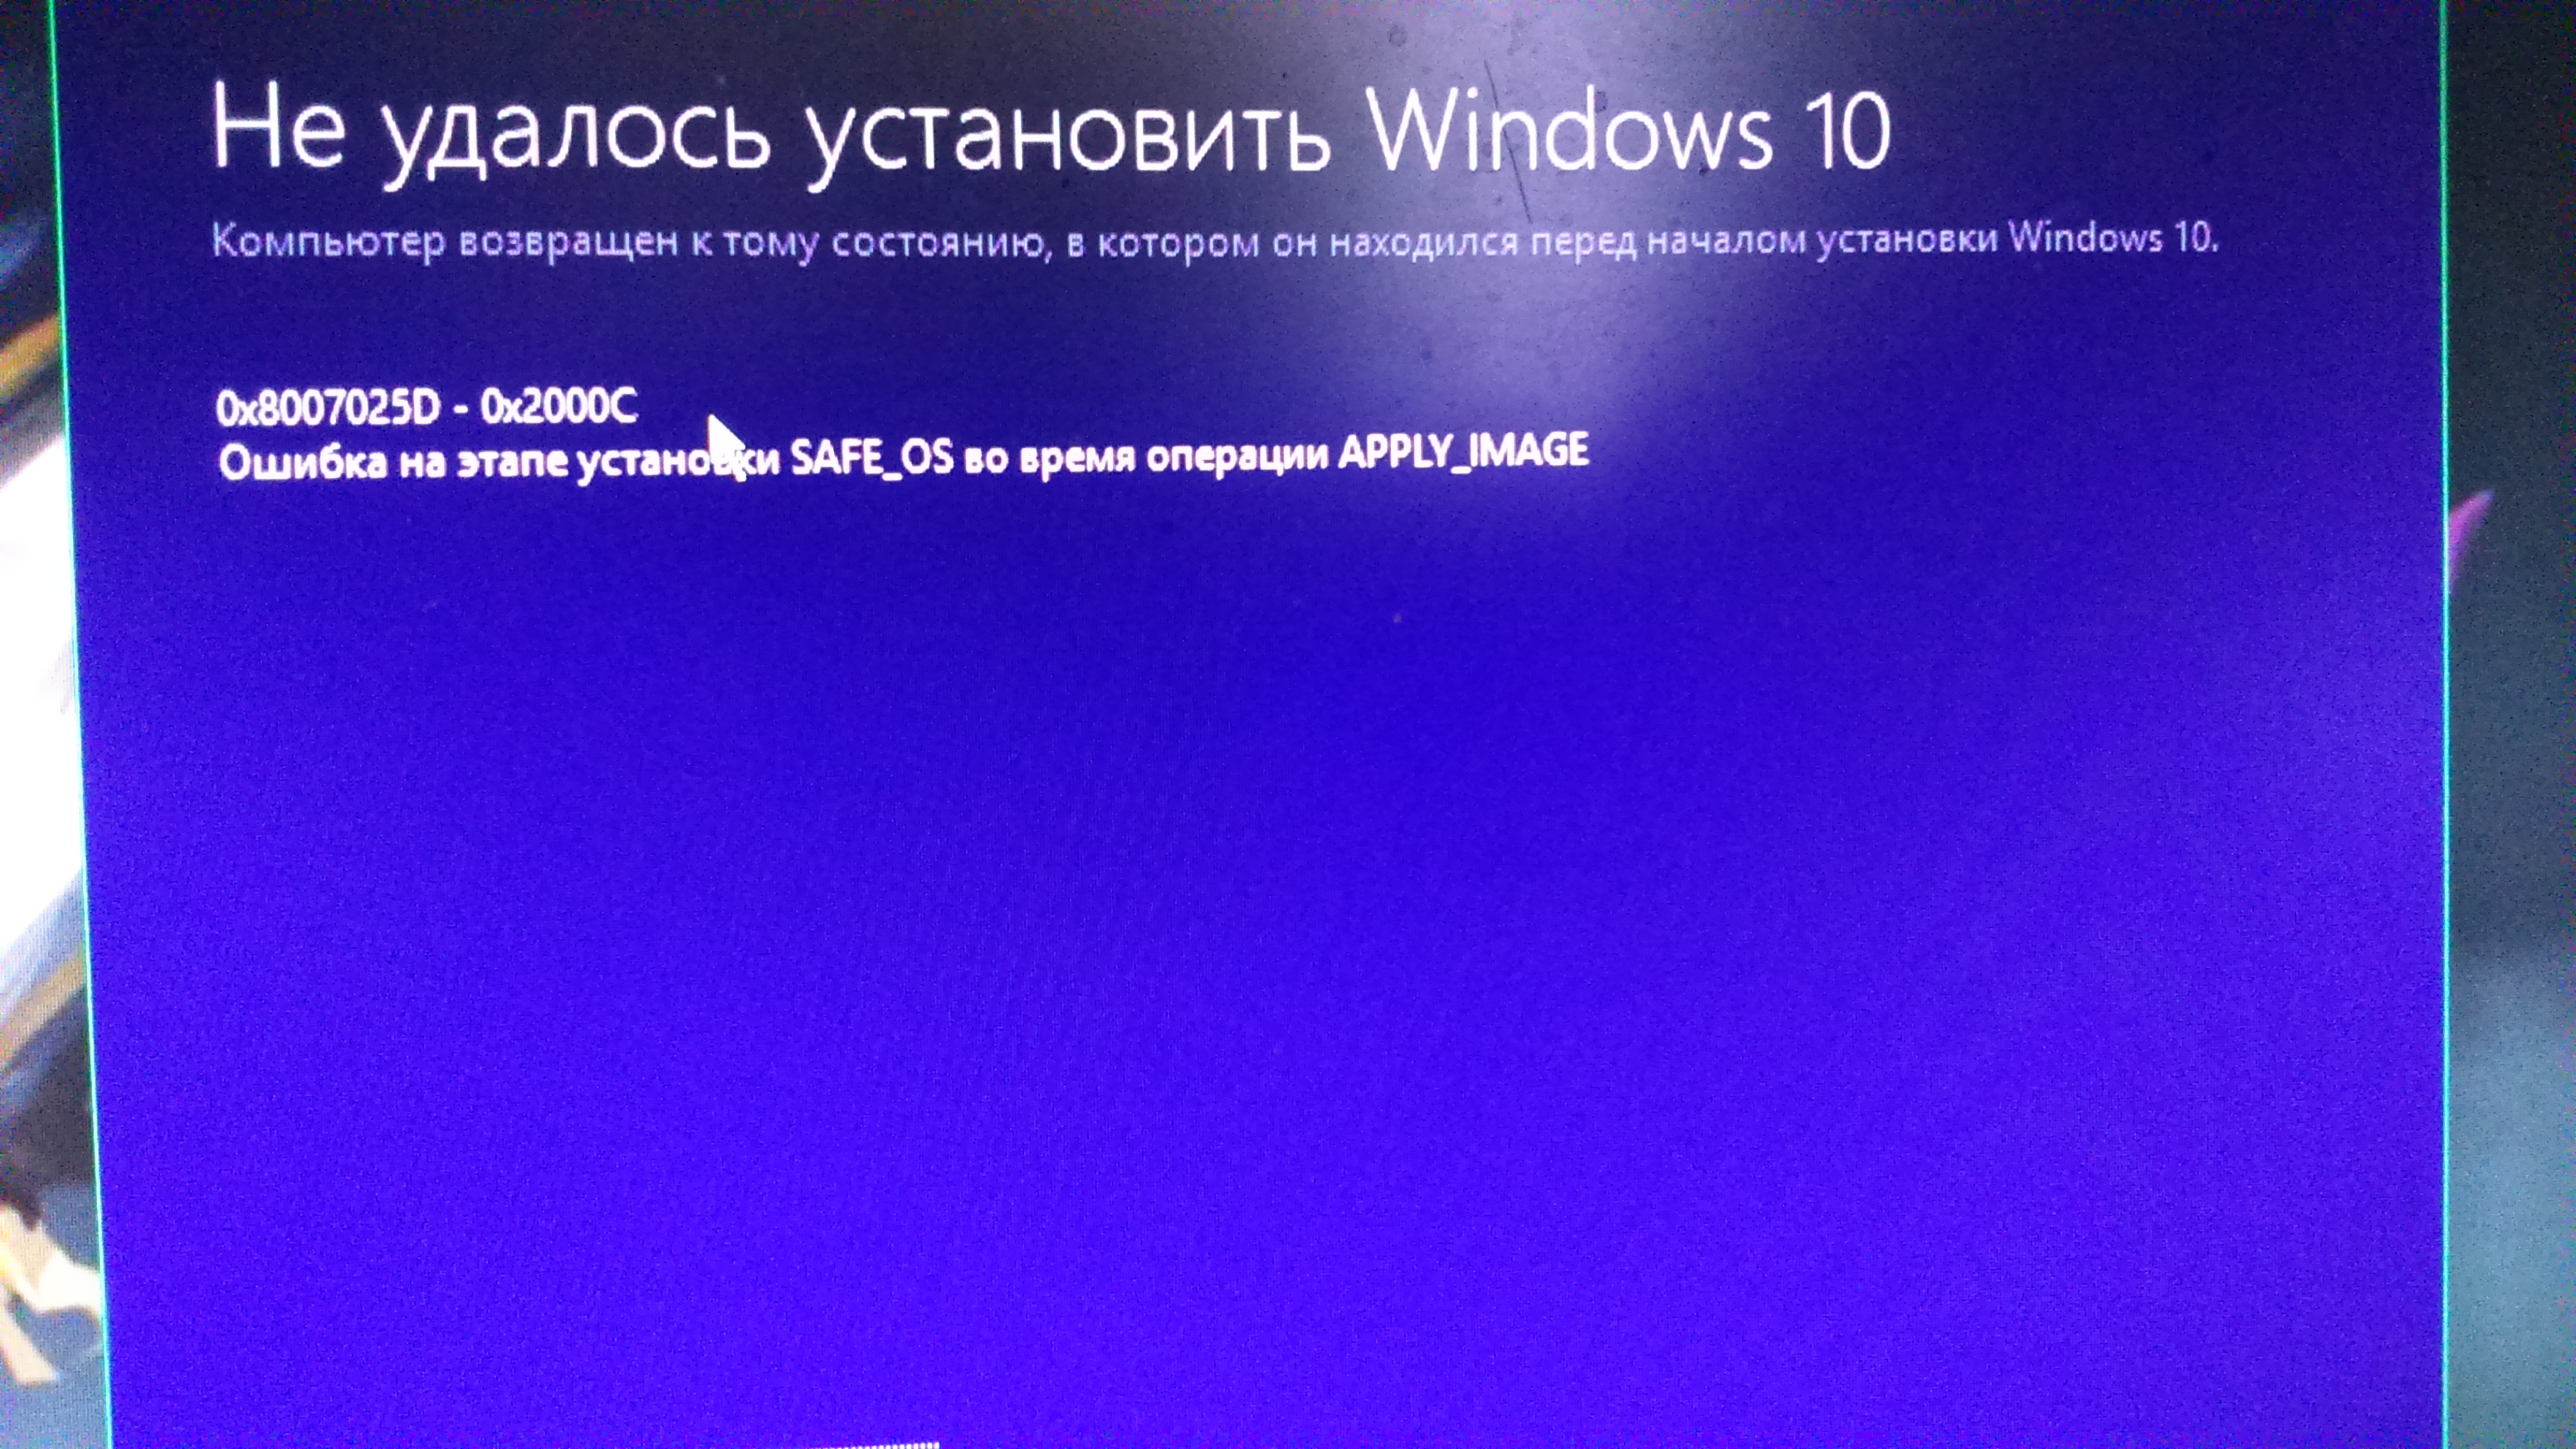 Виндовс останавливается. Ошибка при установке Windows 0x8007025d. Установка виндовс реклама. Виндовс 10 при установки ошибка 0x8007025d. 0x8007025d при установке Windows 10 с флешки.